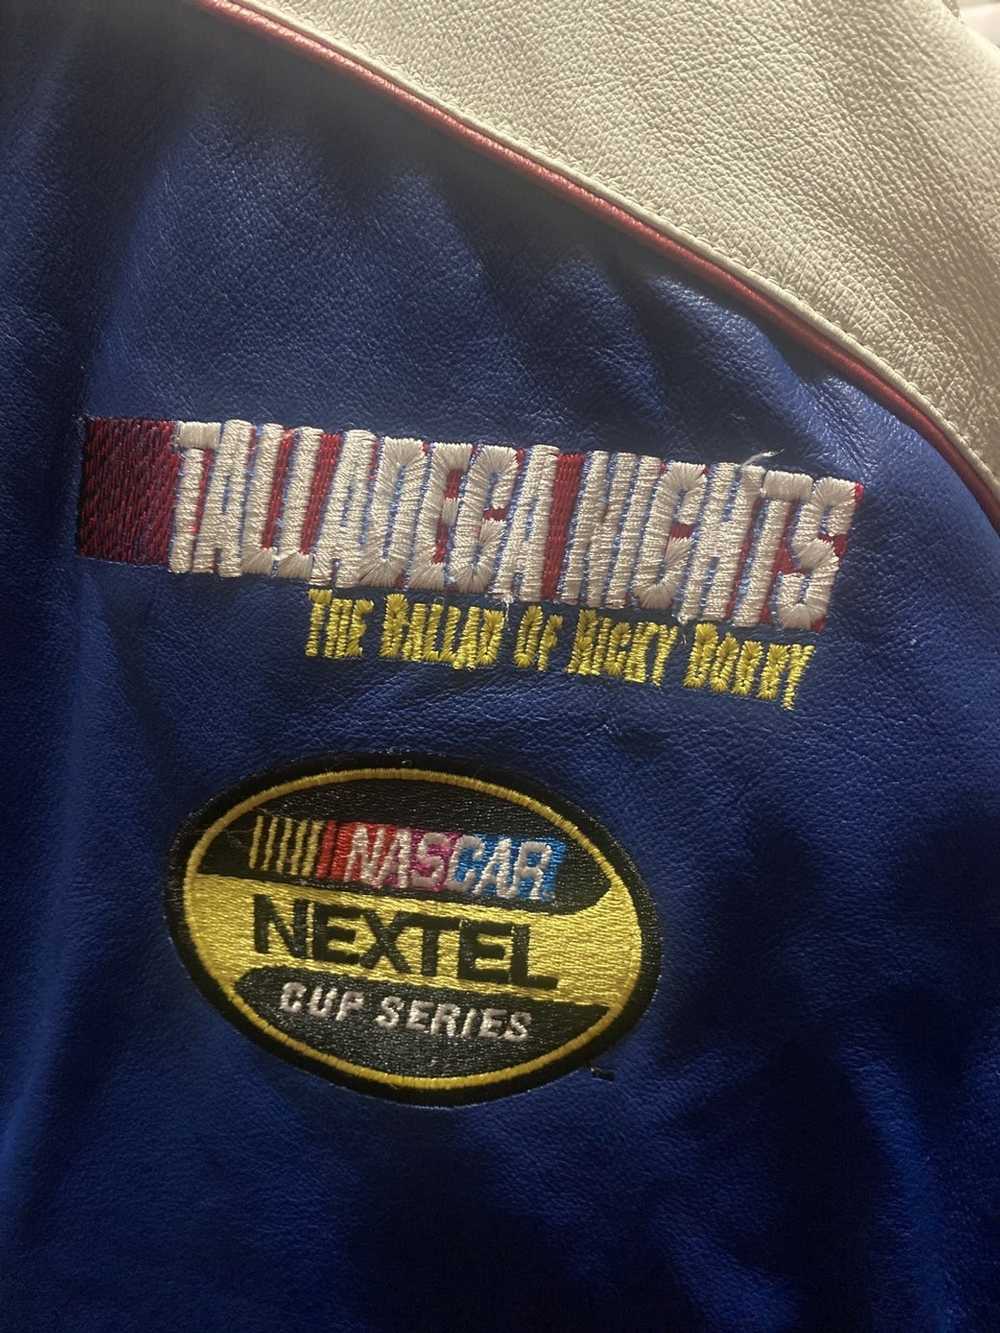 Wilsons Leather Talladega nights racing jacket - image 2